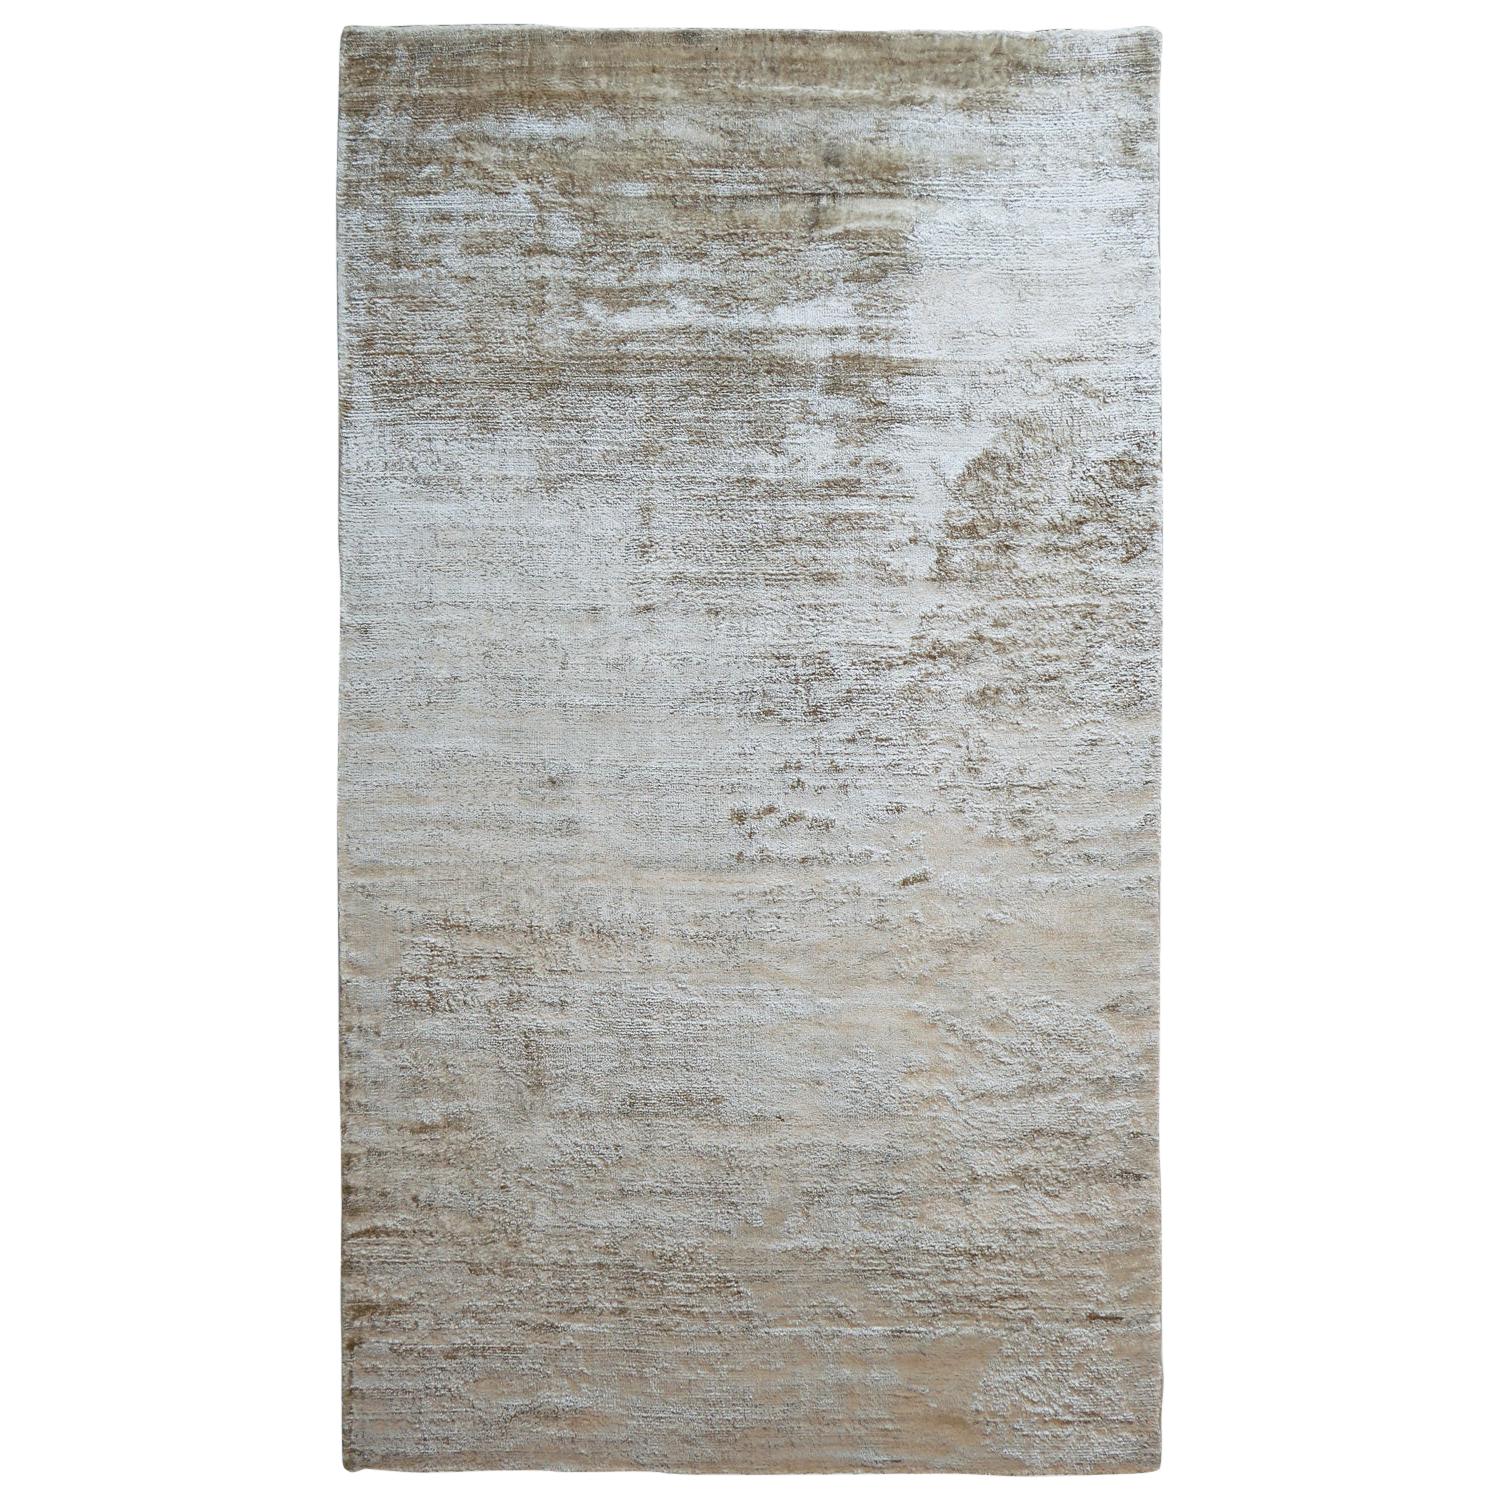 Contemporary Warm Neutral Shiny Soft Rug by Deanna Comellini 200x350 cm